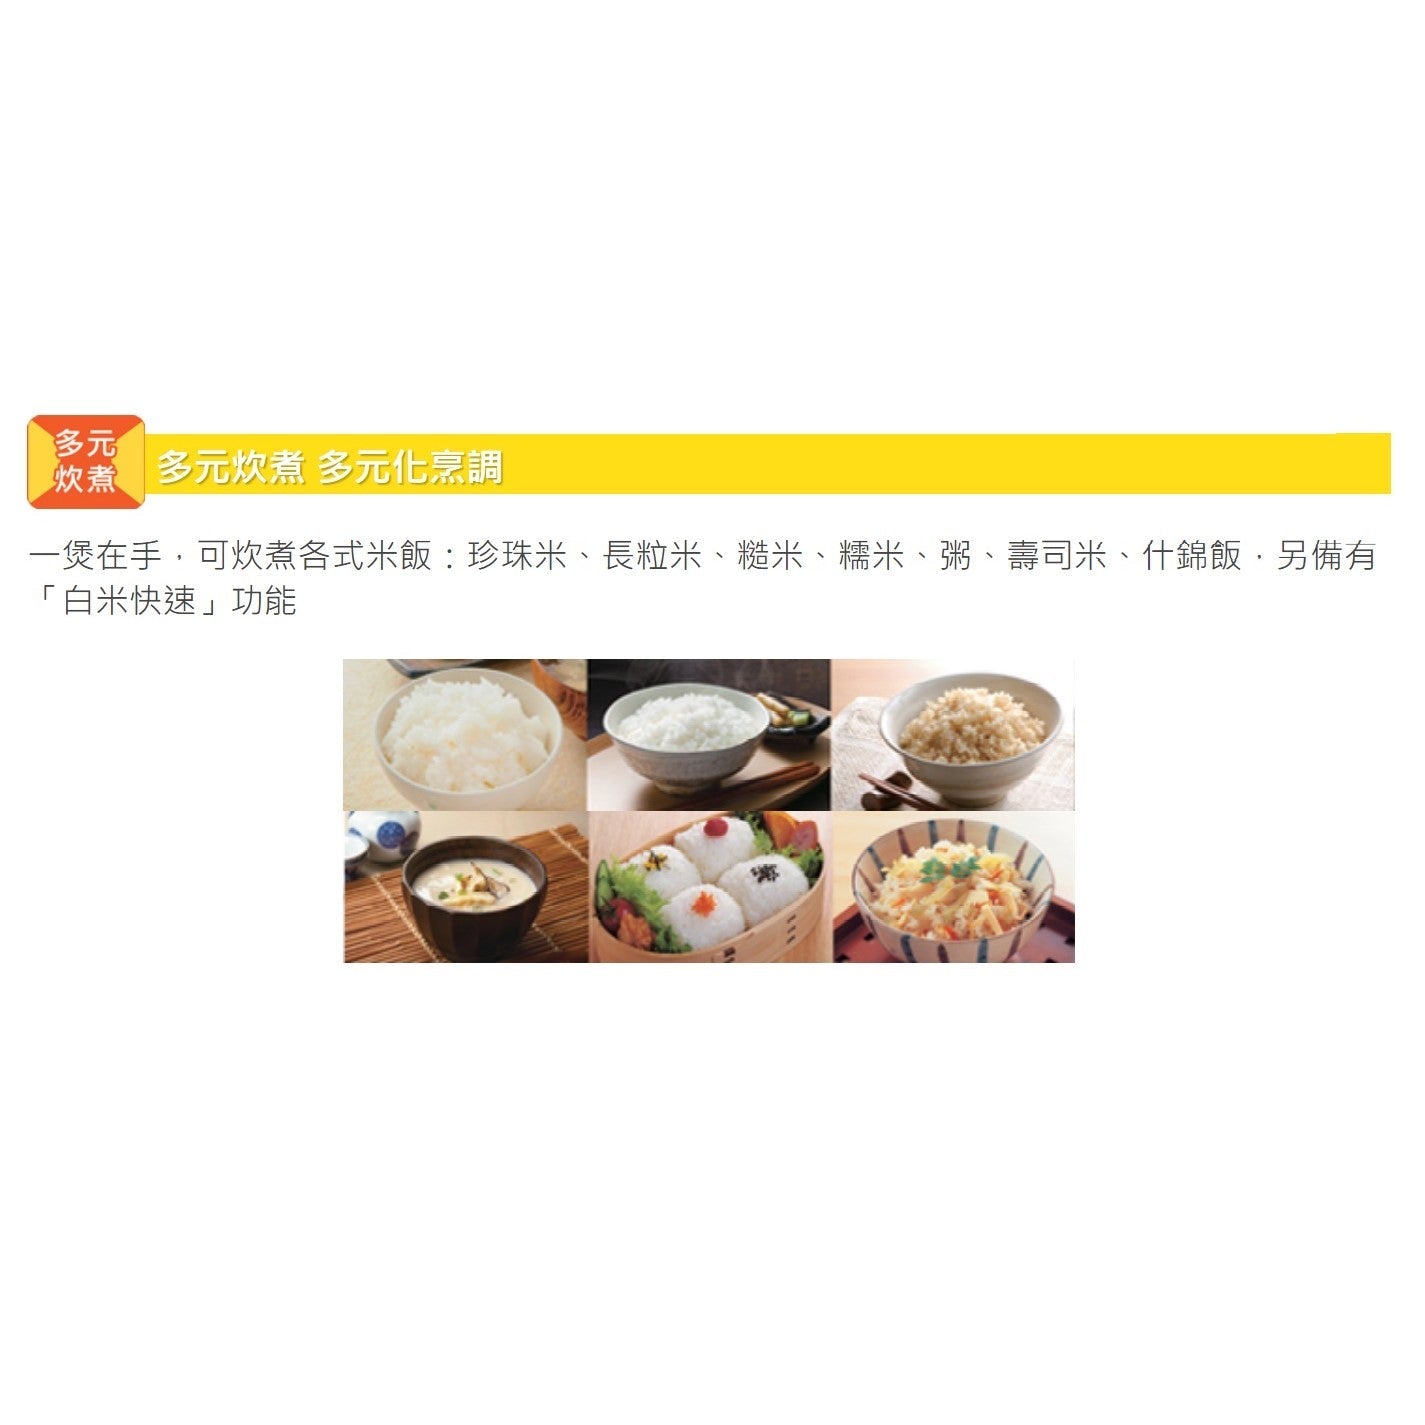 Zojirushi Rice Cooker NS-YSQ10 (Made in Japan)